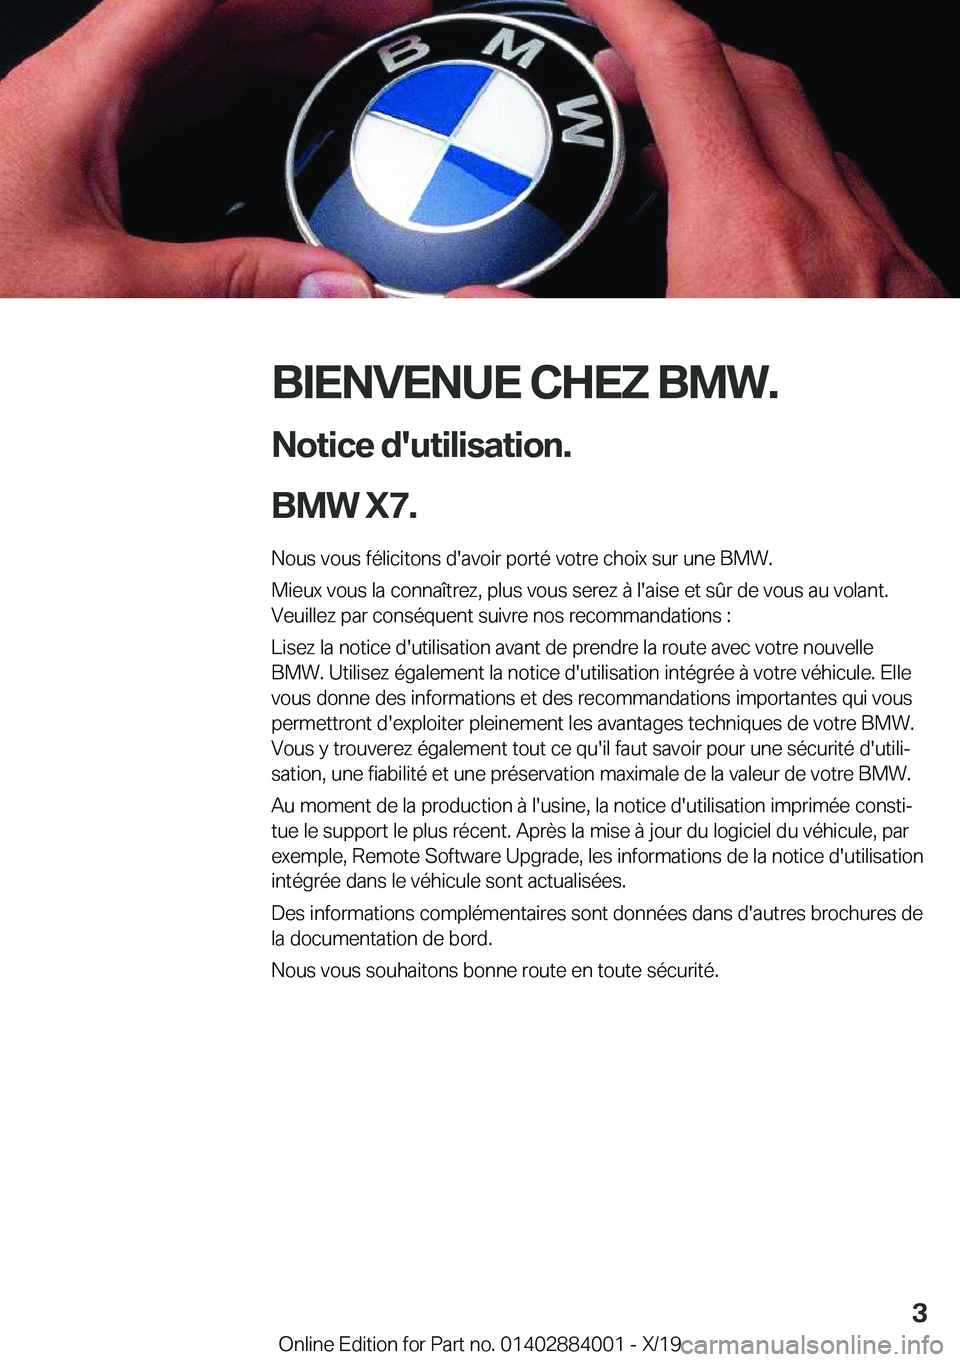 BMW X7 2020  Notices Demploi (in French) �B�I�E�N�V�E�N�U�E��C�H�E�Z��B�M�W�.�N�o�t�i�c�e��d�'�u�t�i�l�i�s�a�t�i�o�n�.
�B�M�W��X�7�. �N�o�u�s��v�o�u�s��f�é�l�i�c�i�t�o�n�s��d�'�a�v�o�i�r��p�o�r�t�é��v�o�t�r�e��c�h�o�i�x�